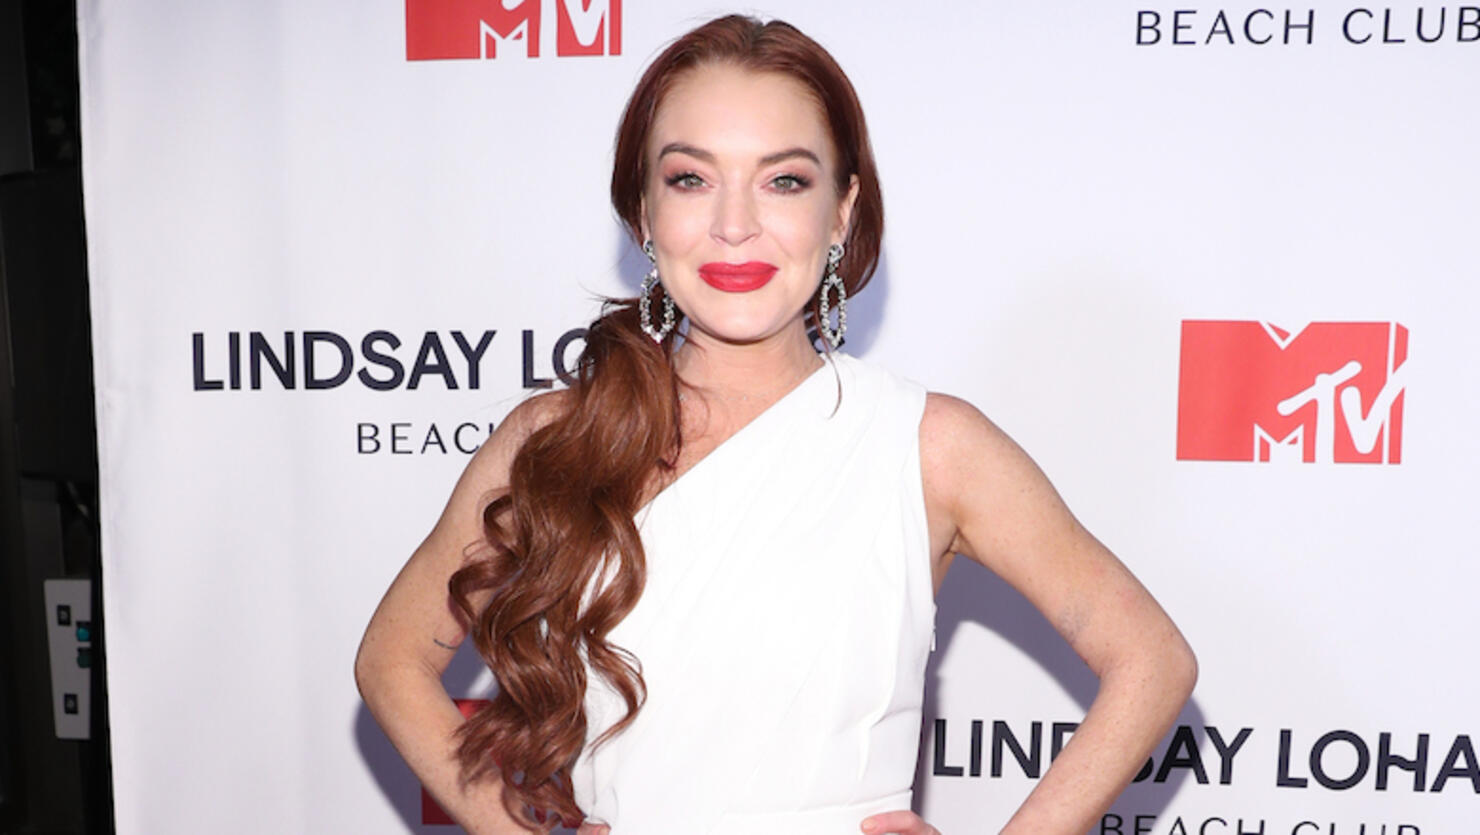 MTV's "Lindsay Lohan's Beach Club" Premiere Party